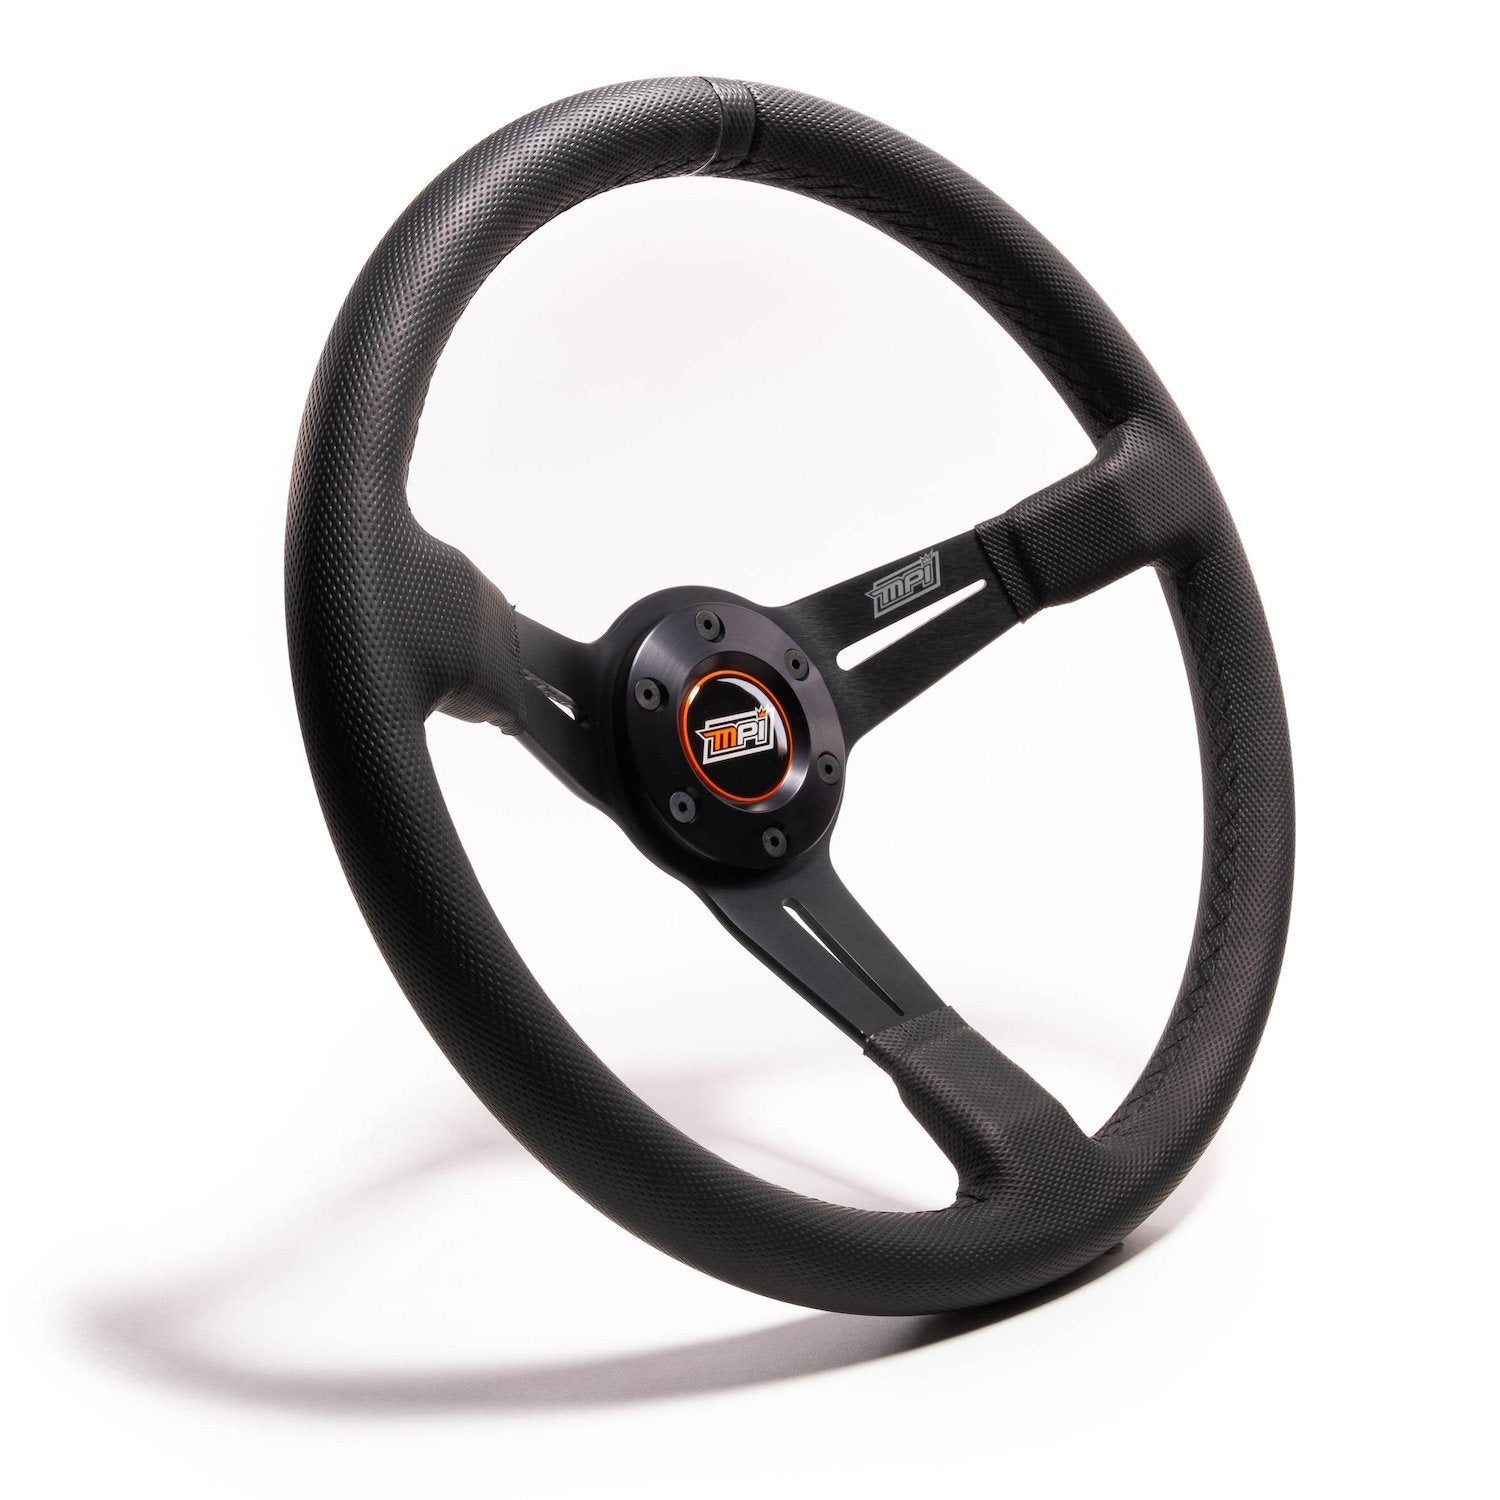 DO-14 Steering Wheels MPI display